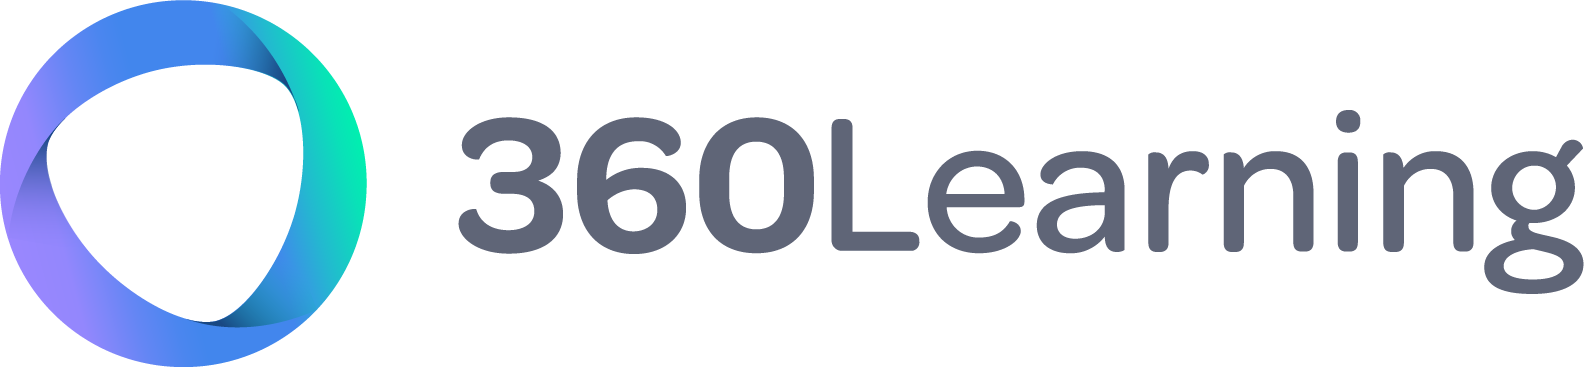 Vision Fund investment portfolio company 360Learning's logo